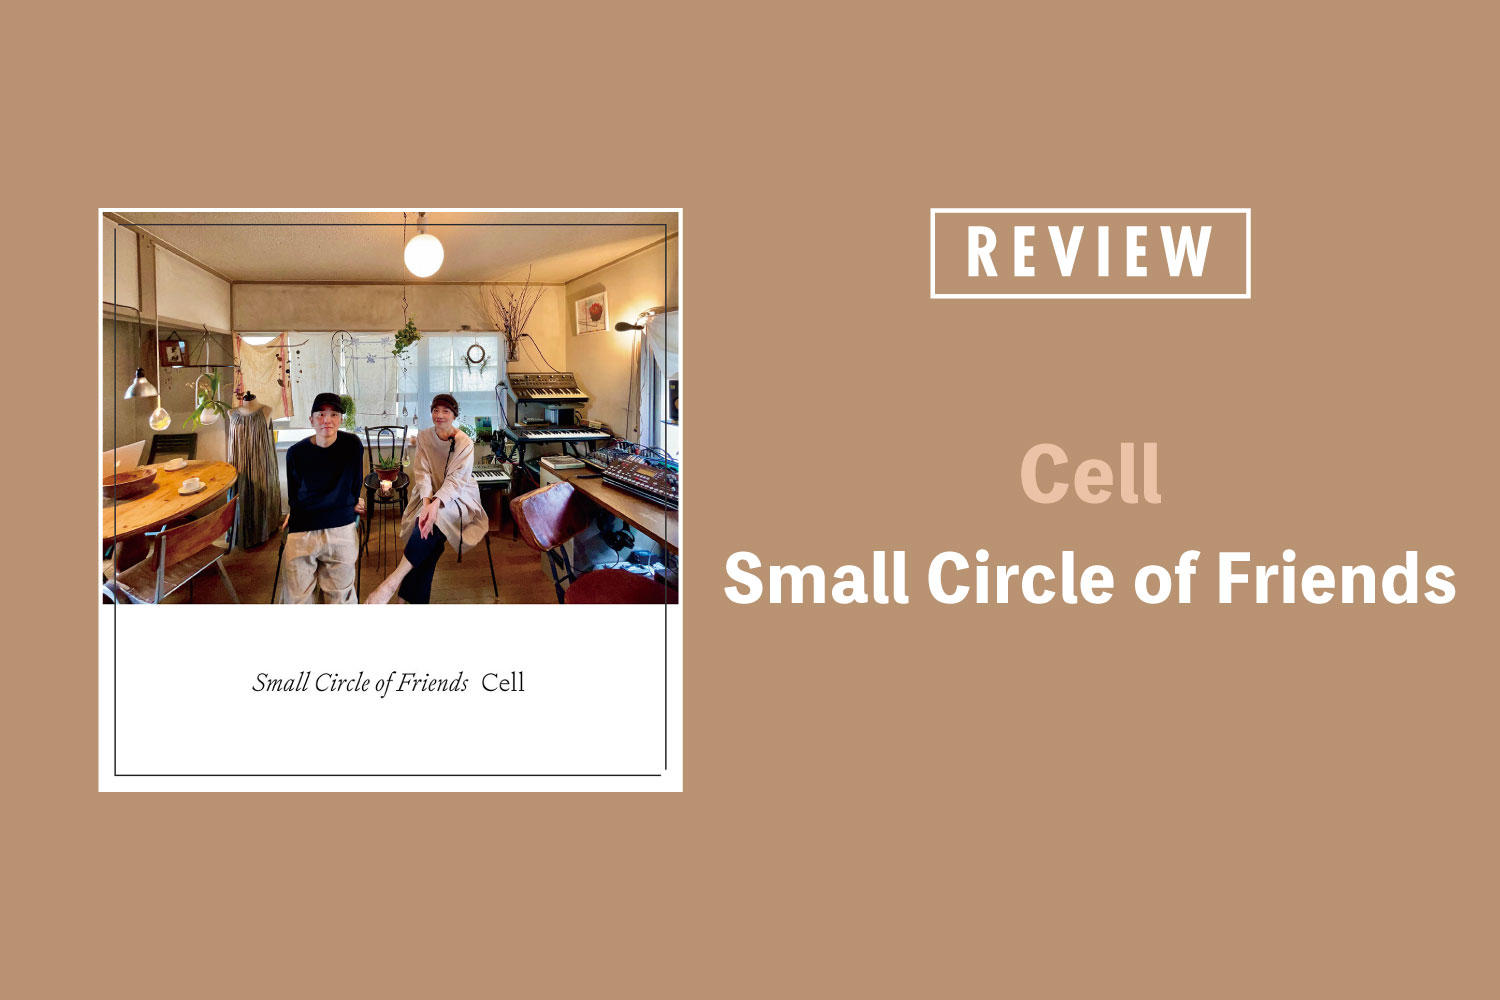 Small Circle of Friends「Cell」──混沌とした時代、そこに生まれる感情をフラットに映し出す新作